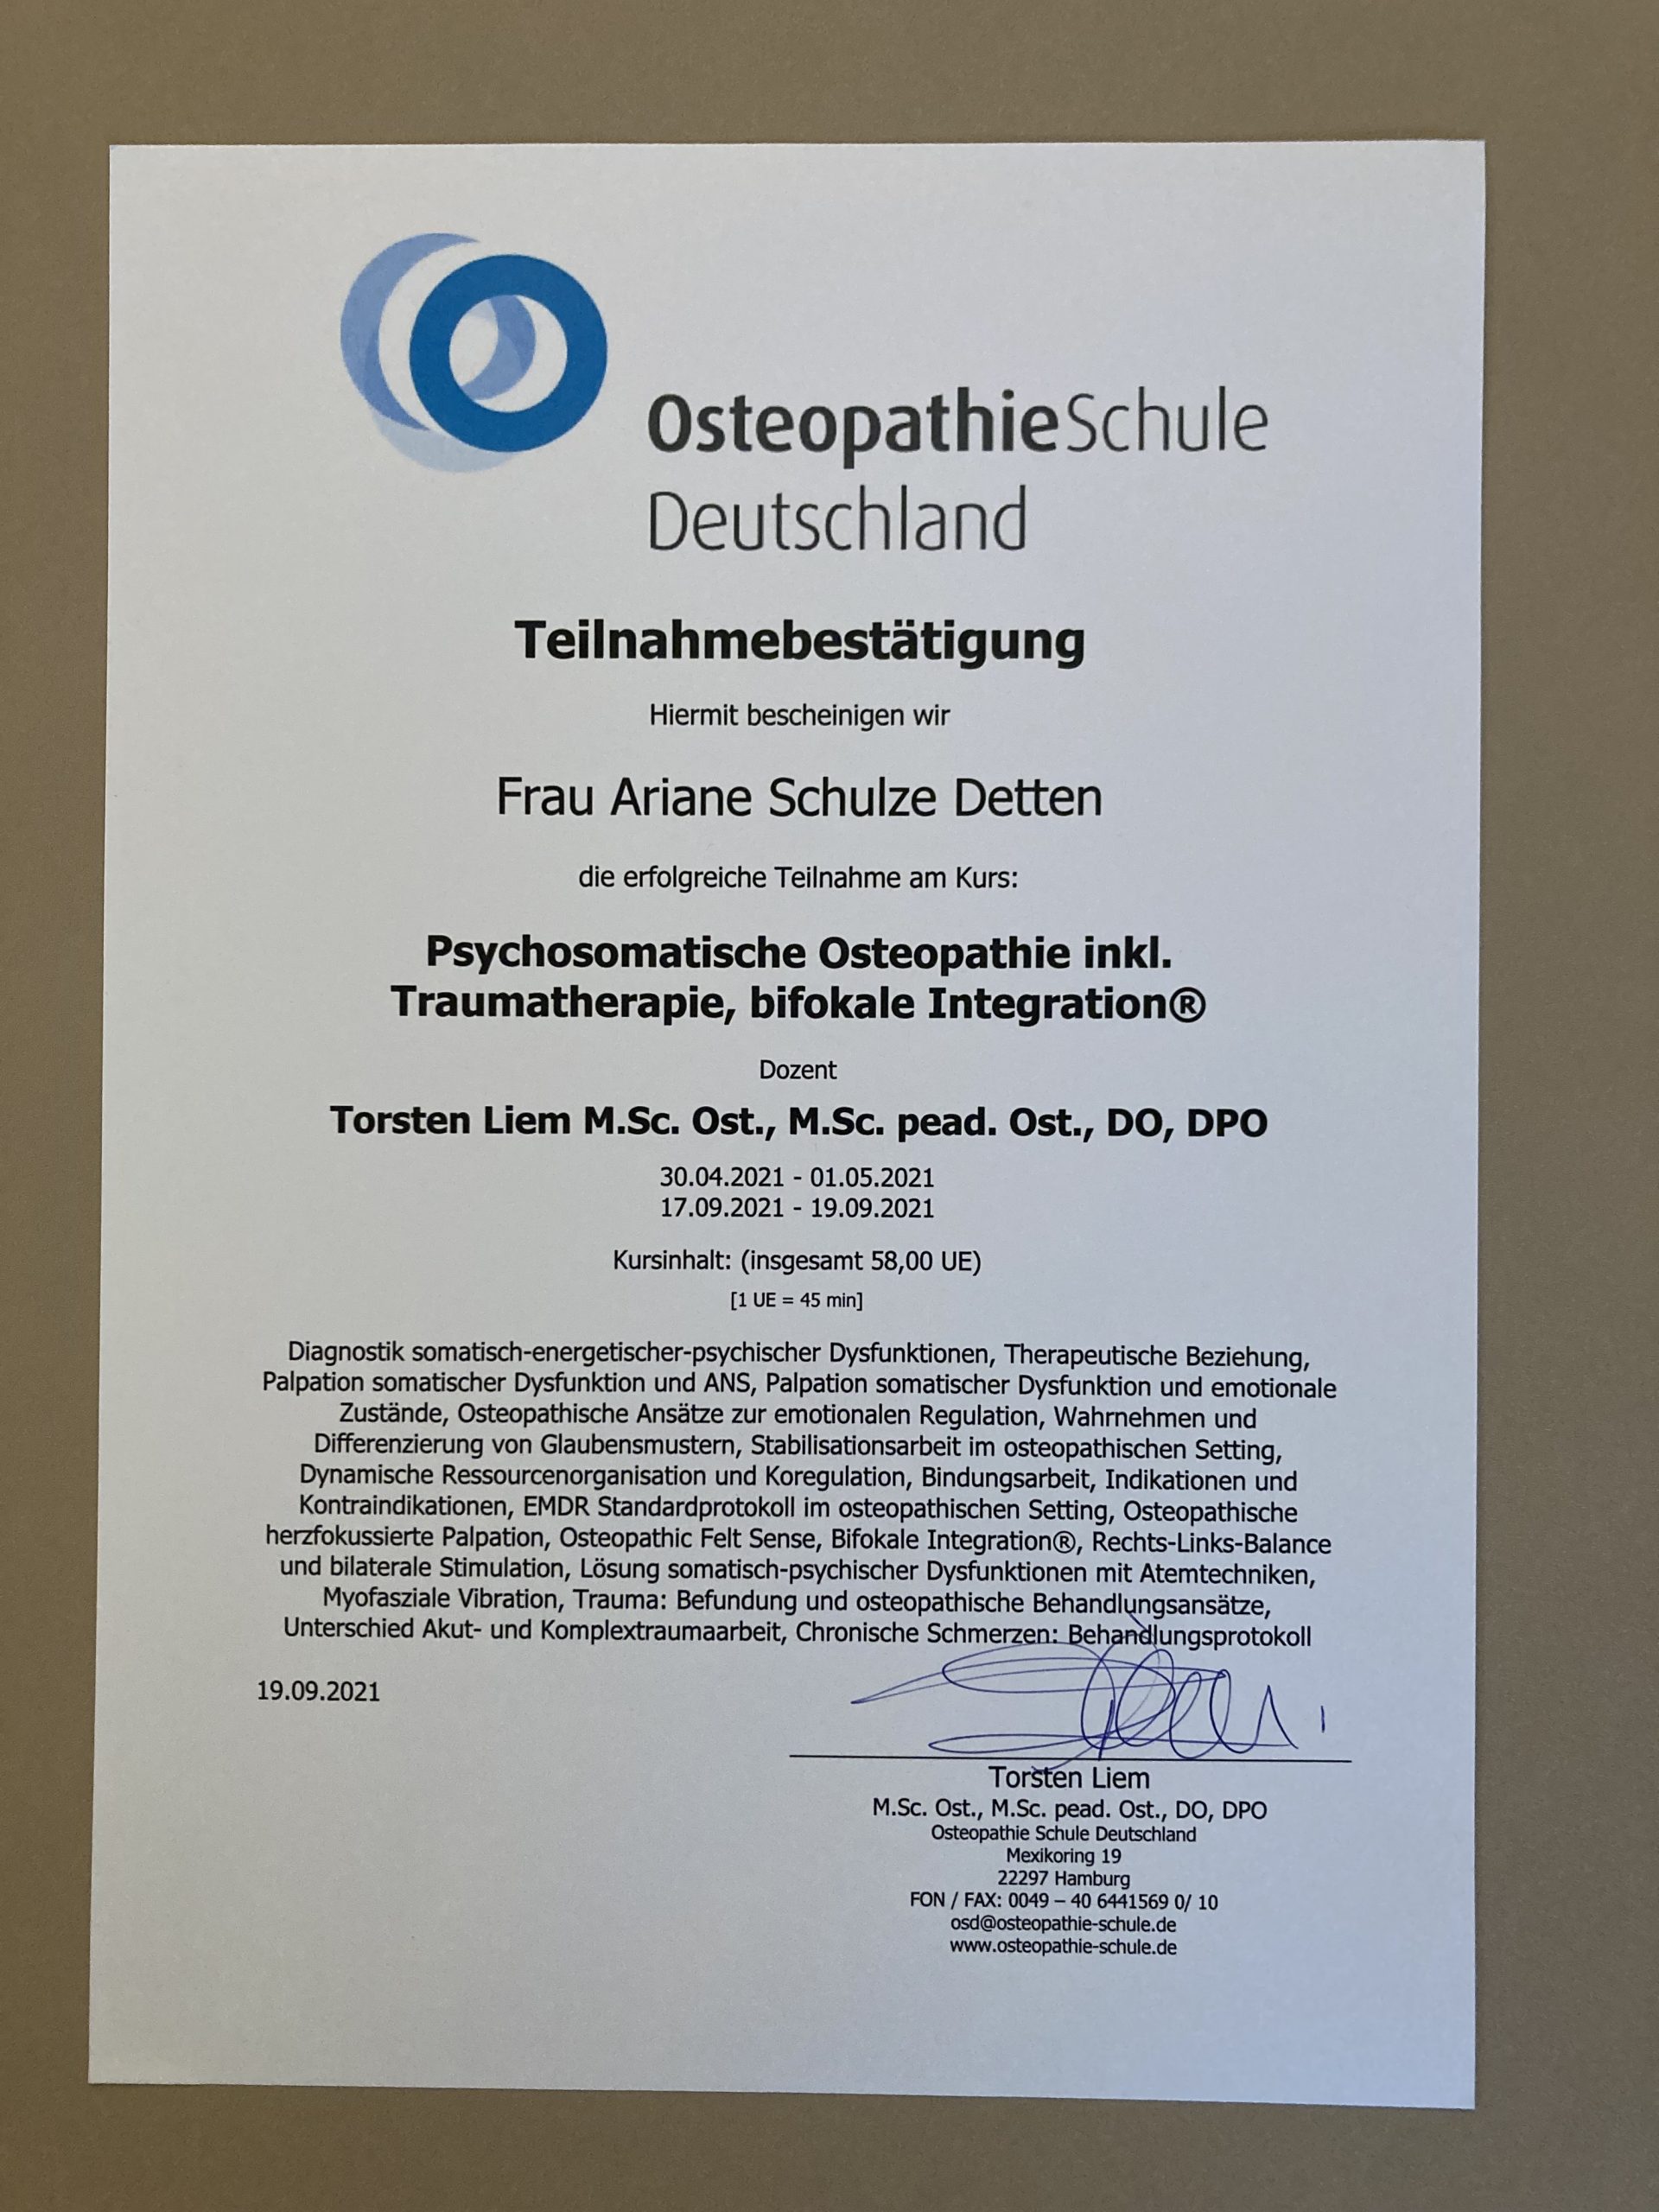 You are currently viewing Fortbildung Psychosomatische Osteopathie, Traumatherapie, bifokale Integration Vol.2